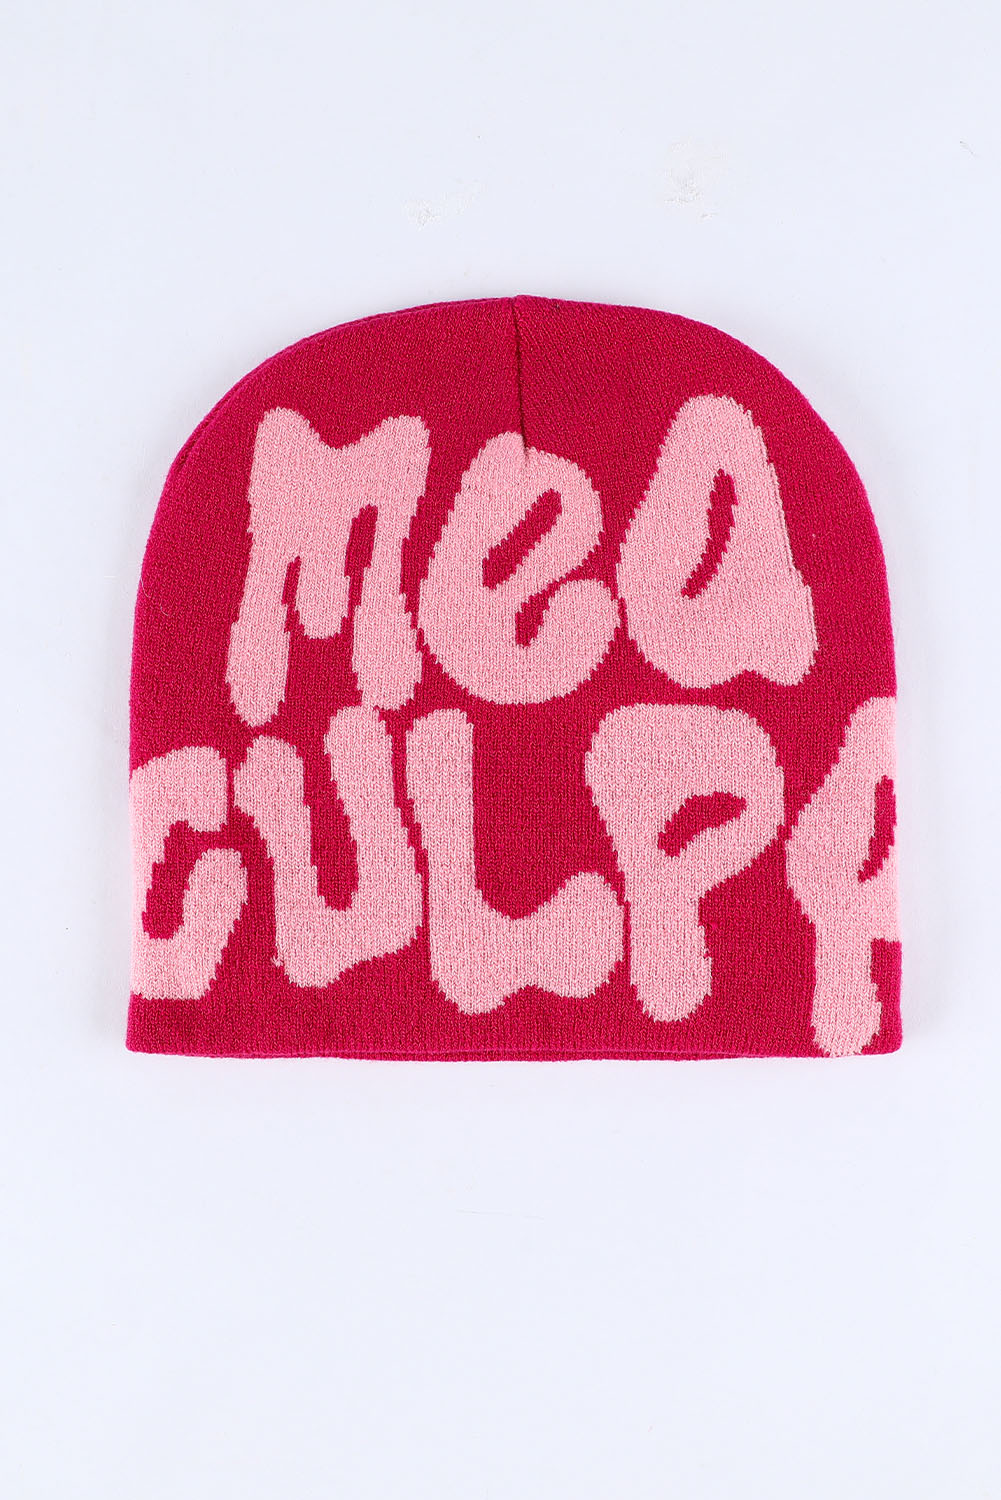 US$ 2.62 Drop-shipping Rose MEA CULPA Alphabet Knit Beanie Hat for Women